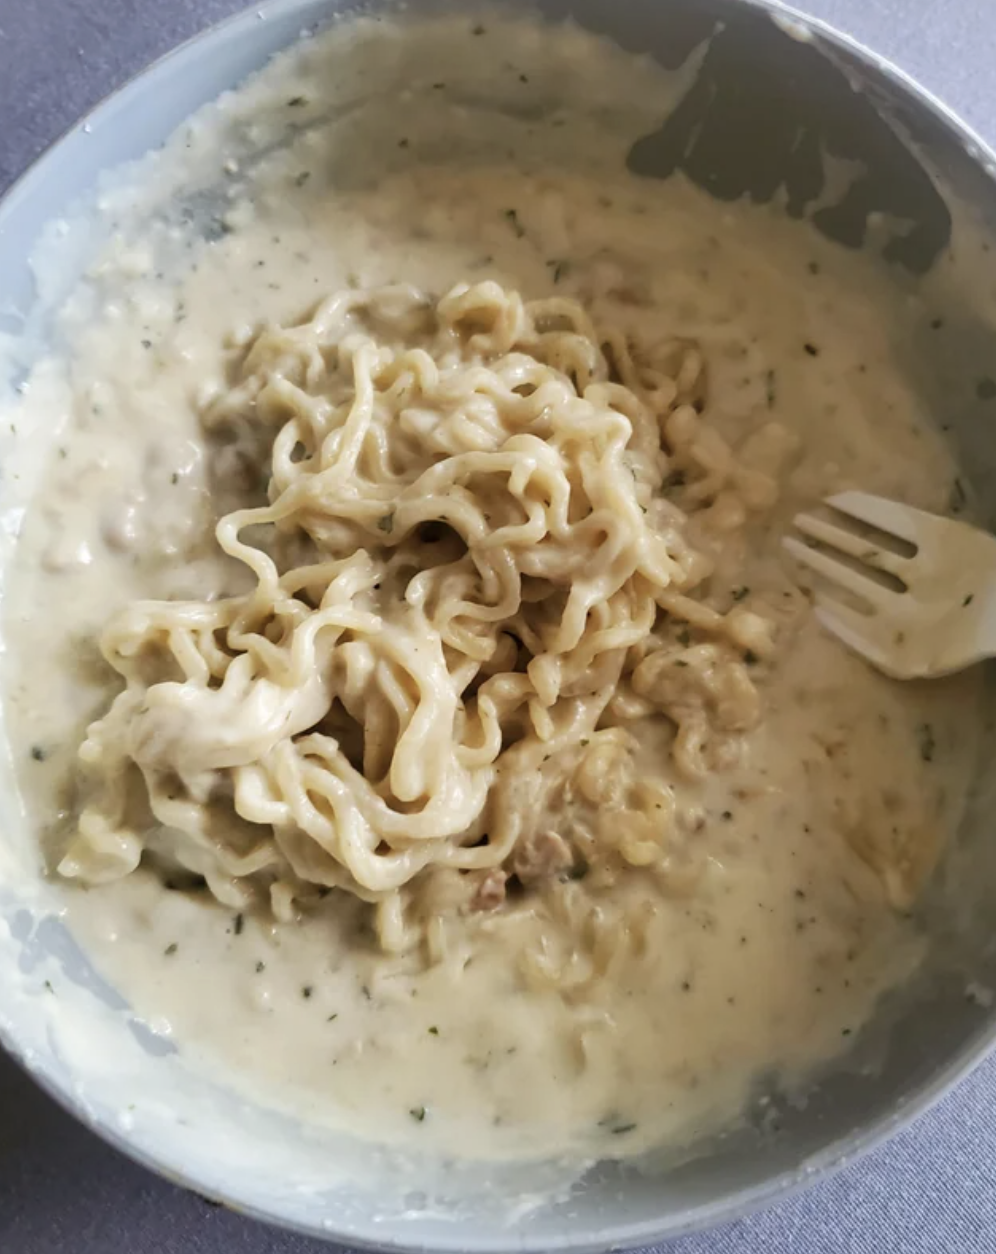 Cream of mushroom soup with ramen noodles.